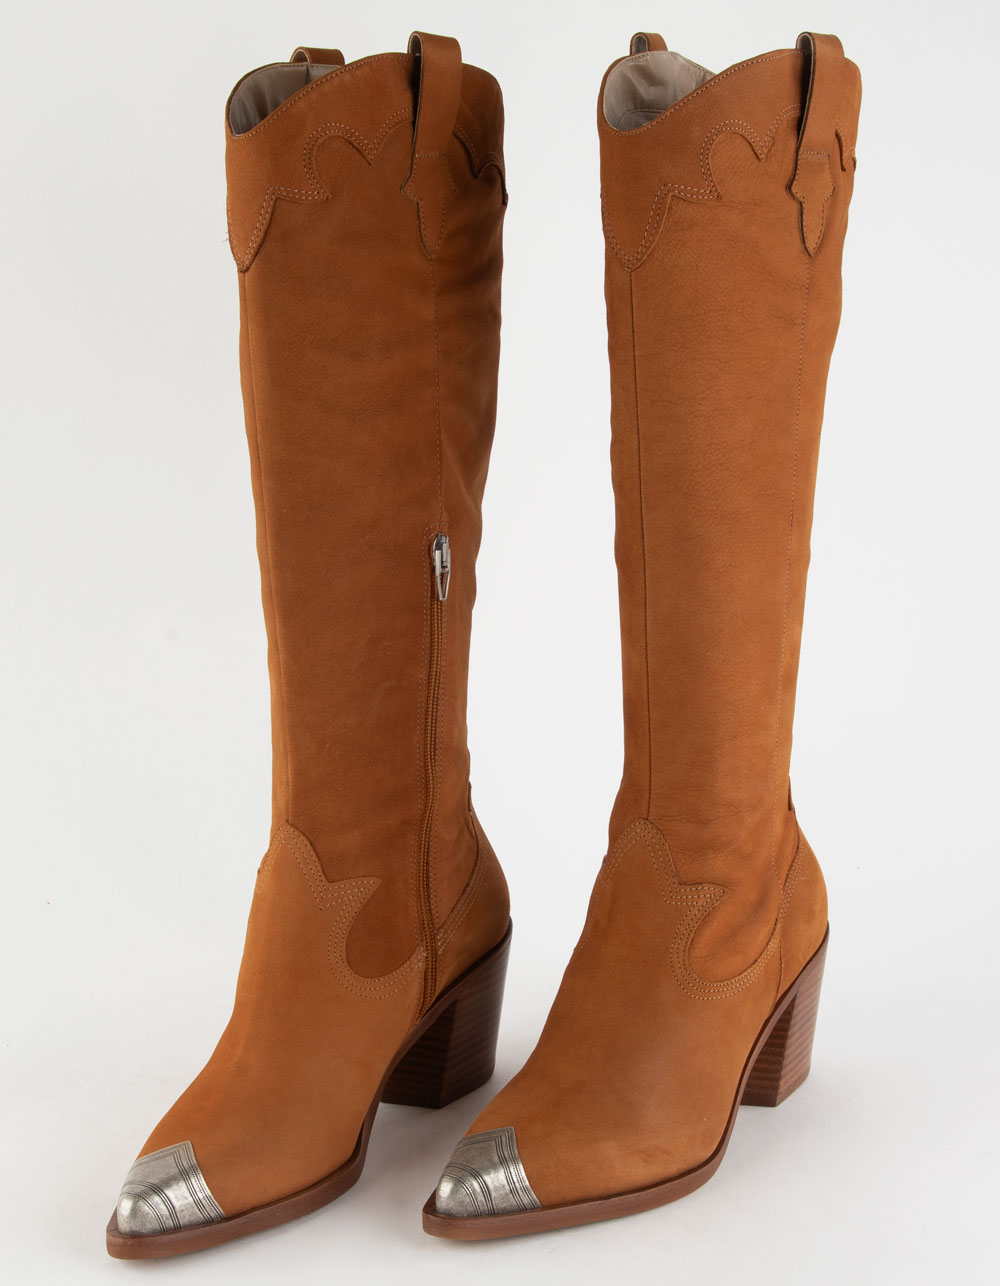 DOLCE VITA Kamryn Knee High Western Womens Boots